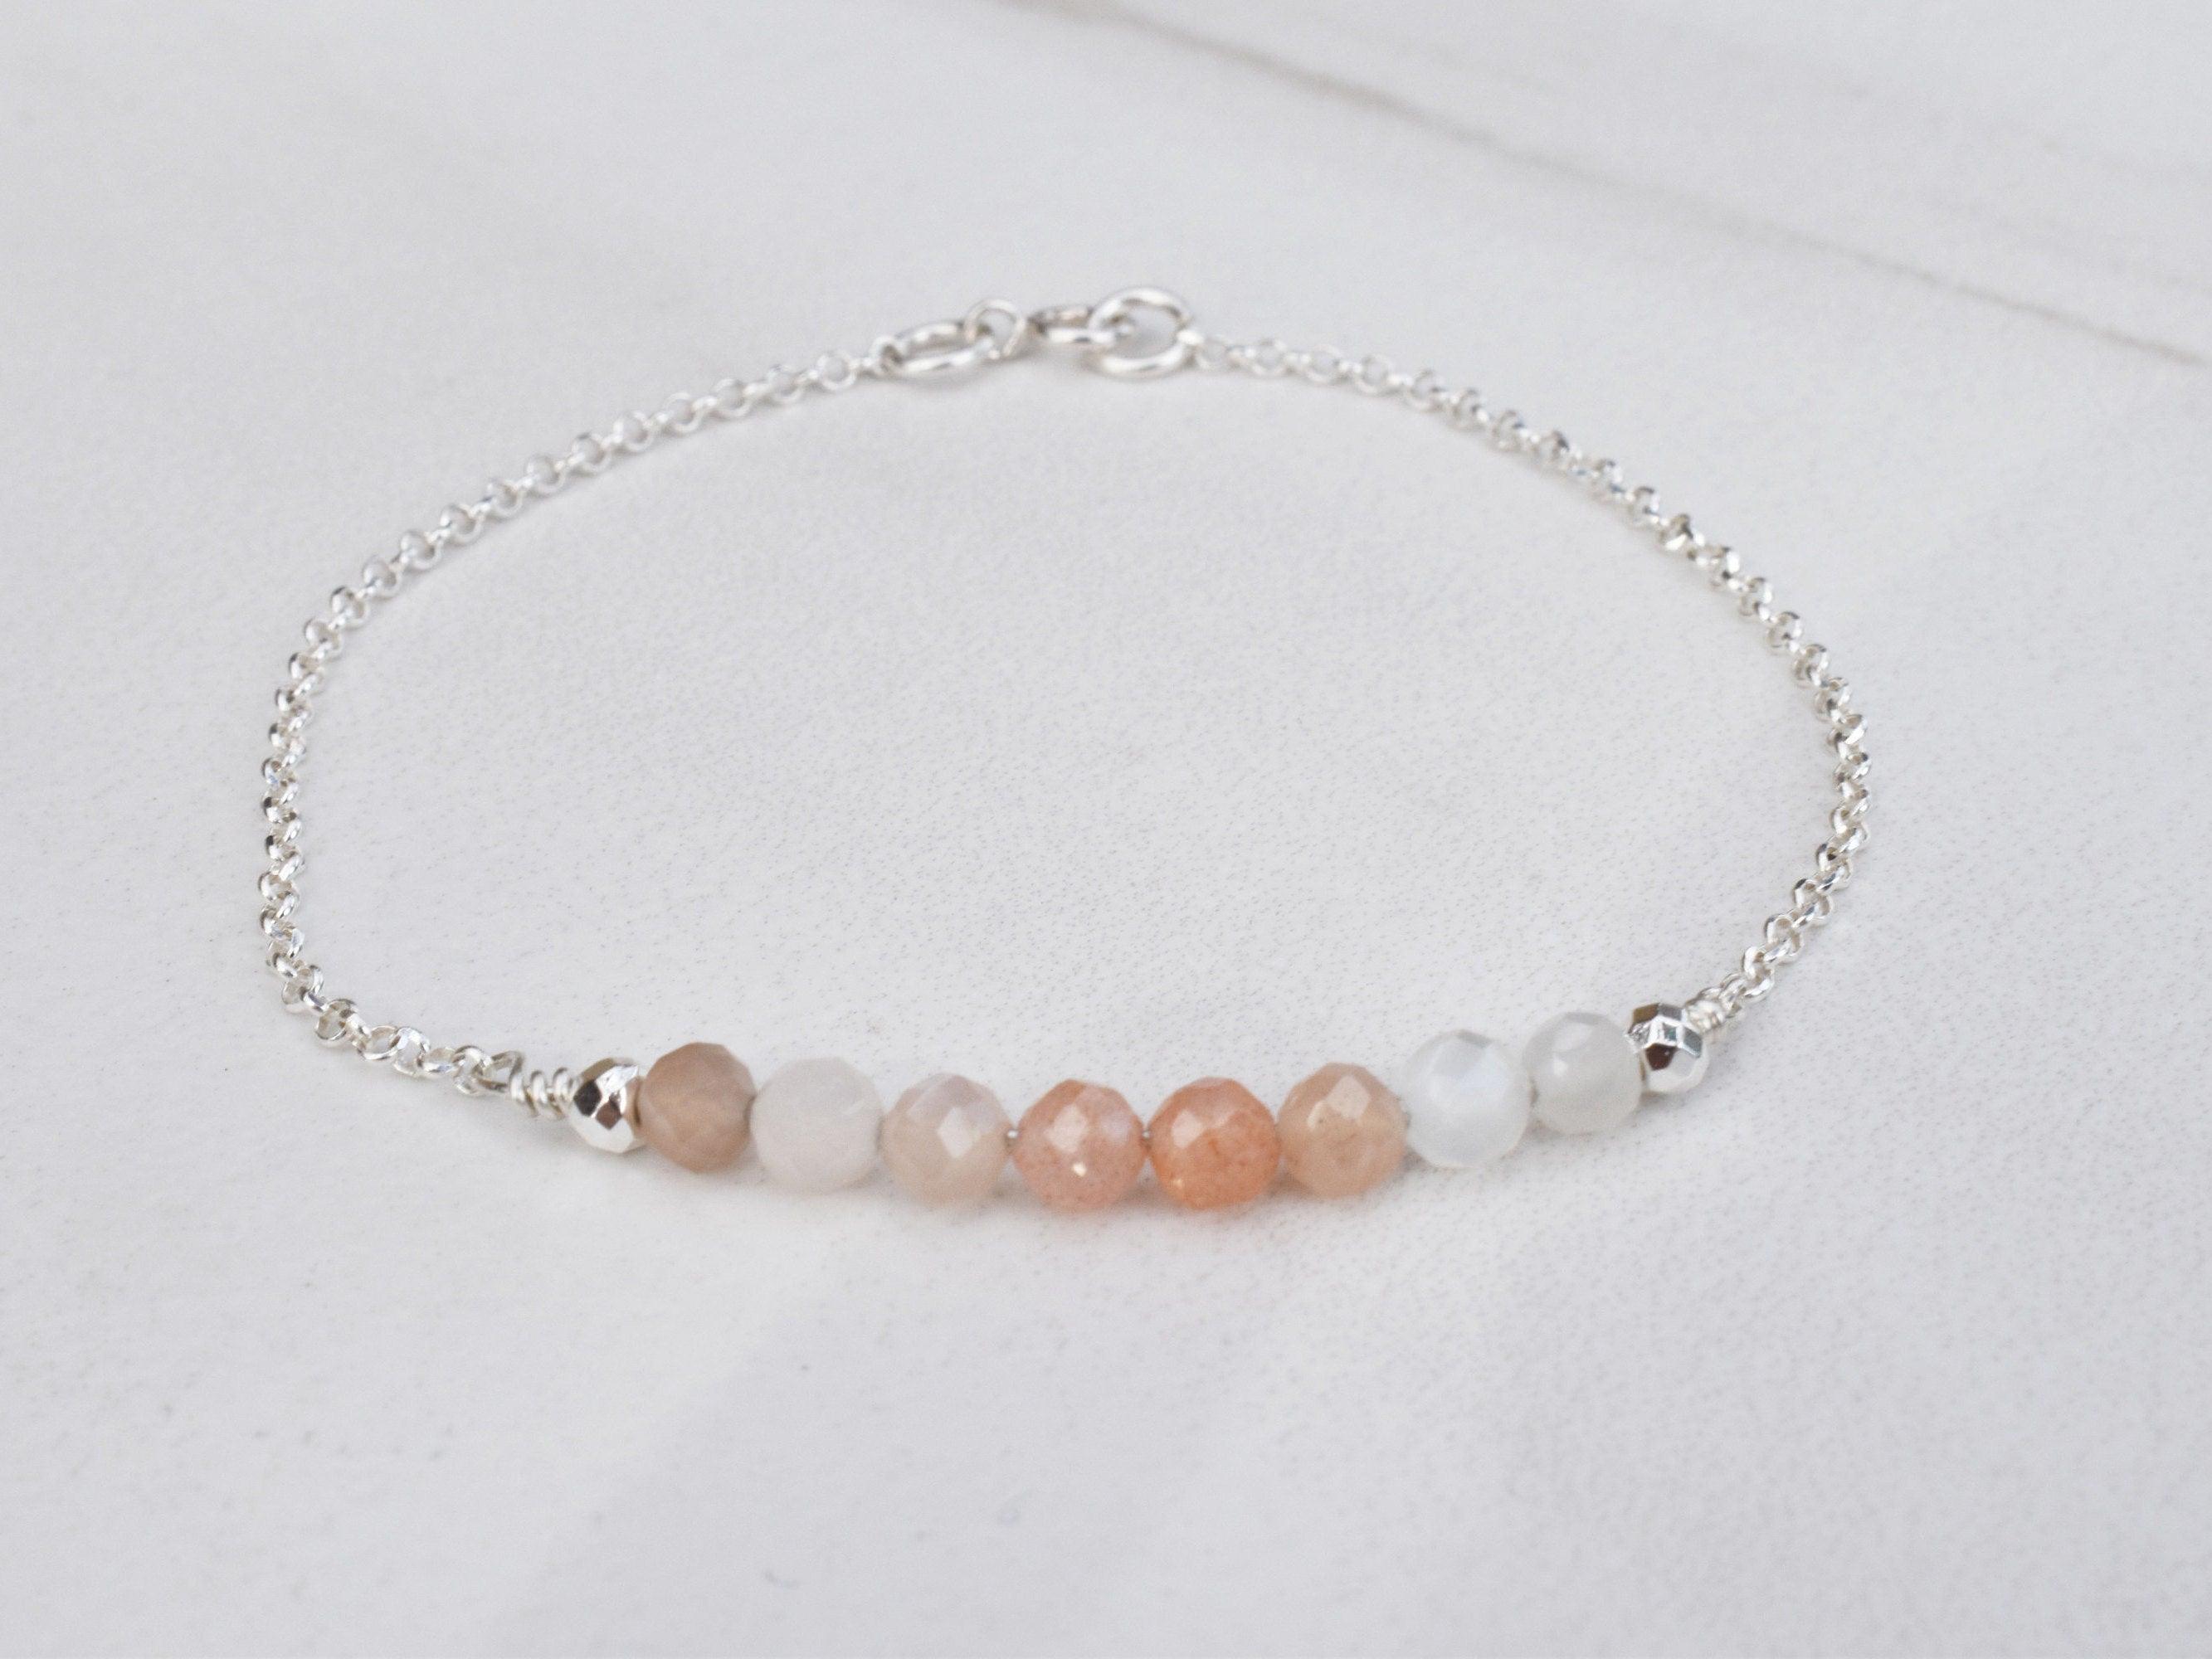 Dainty Peach Moonstone Fertility Healing Bracelet with Reiki Infused Energy - 3Rosebudsco.com